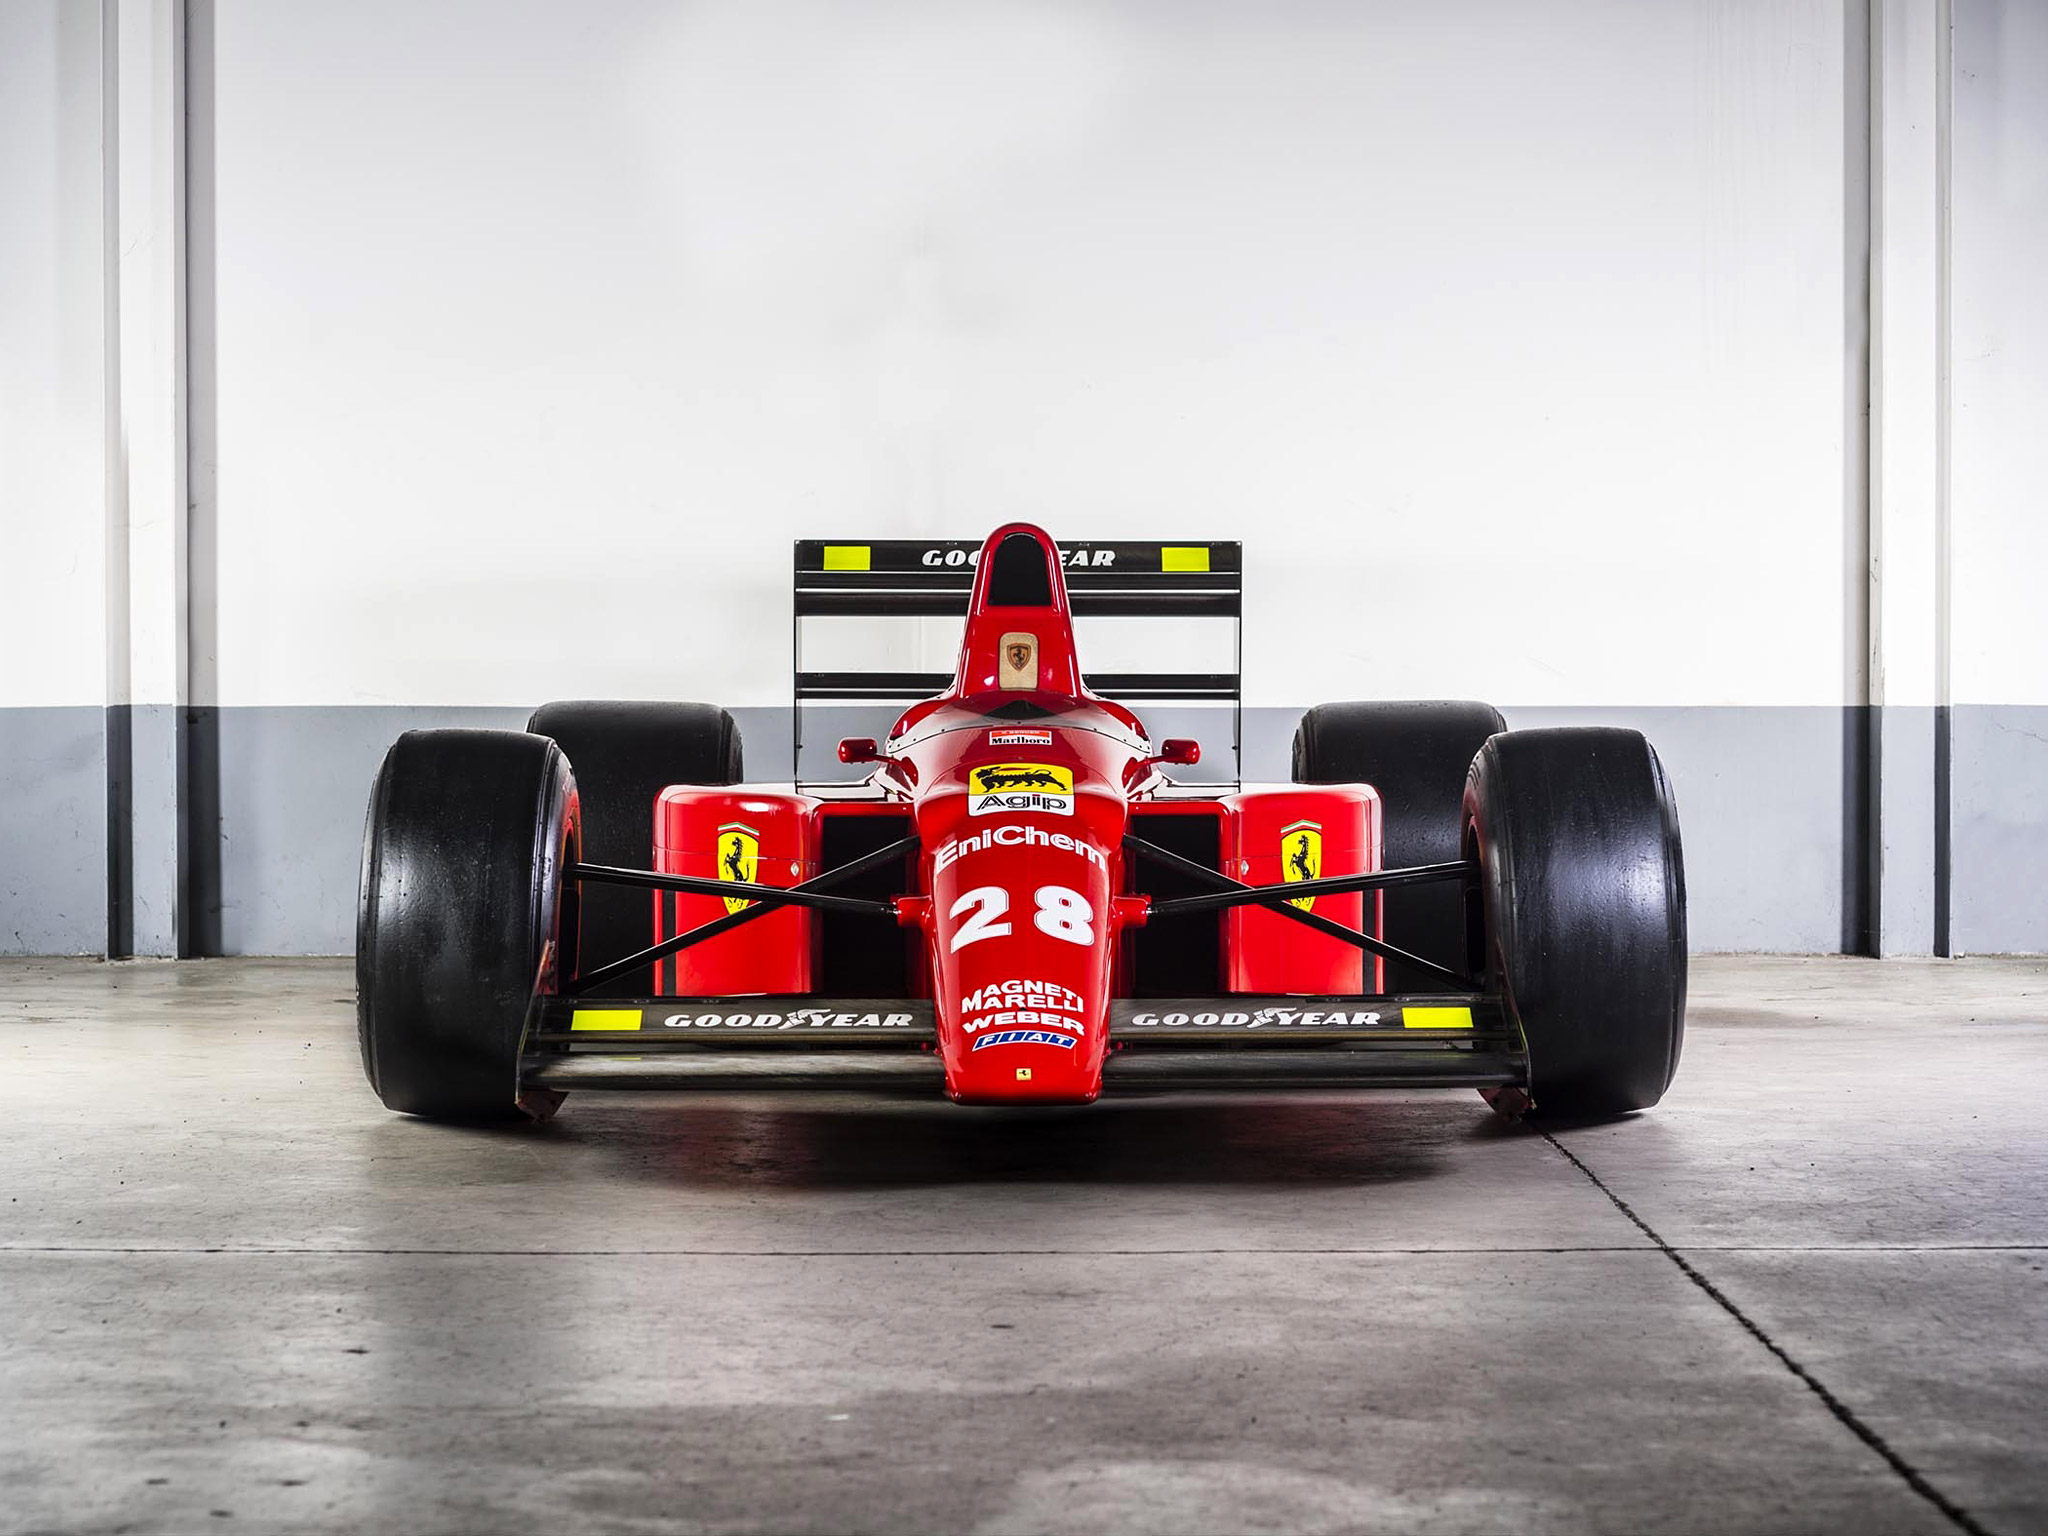  1989 Ferrari F1-89 Wallpaper.